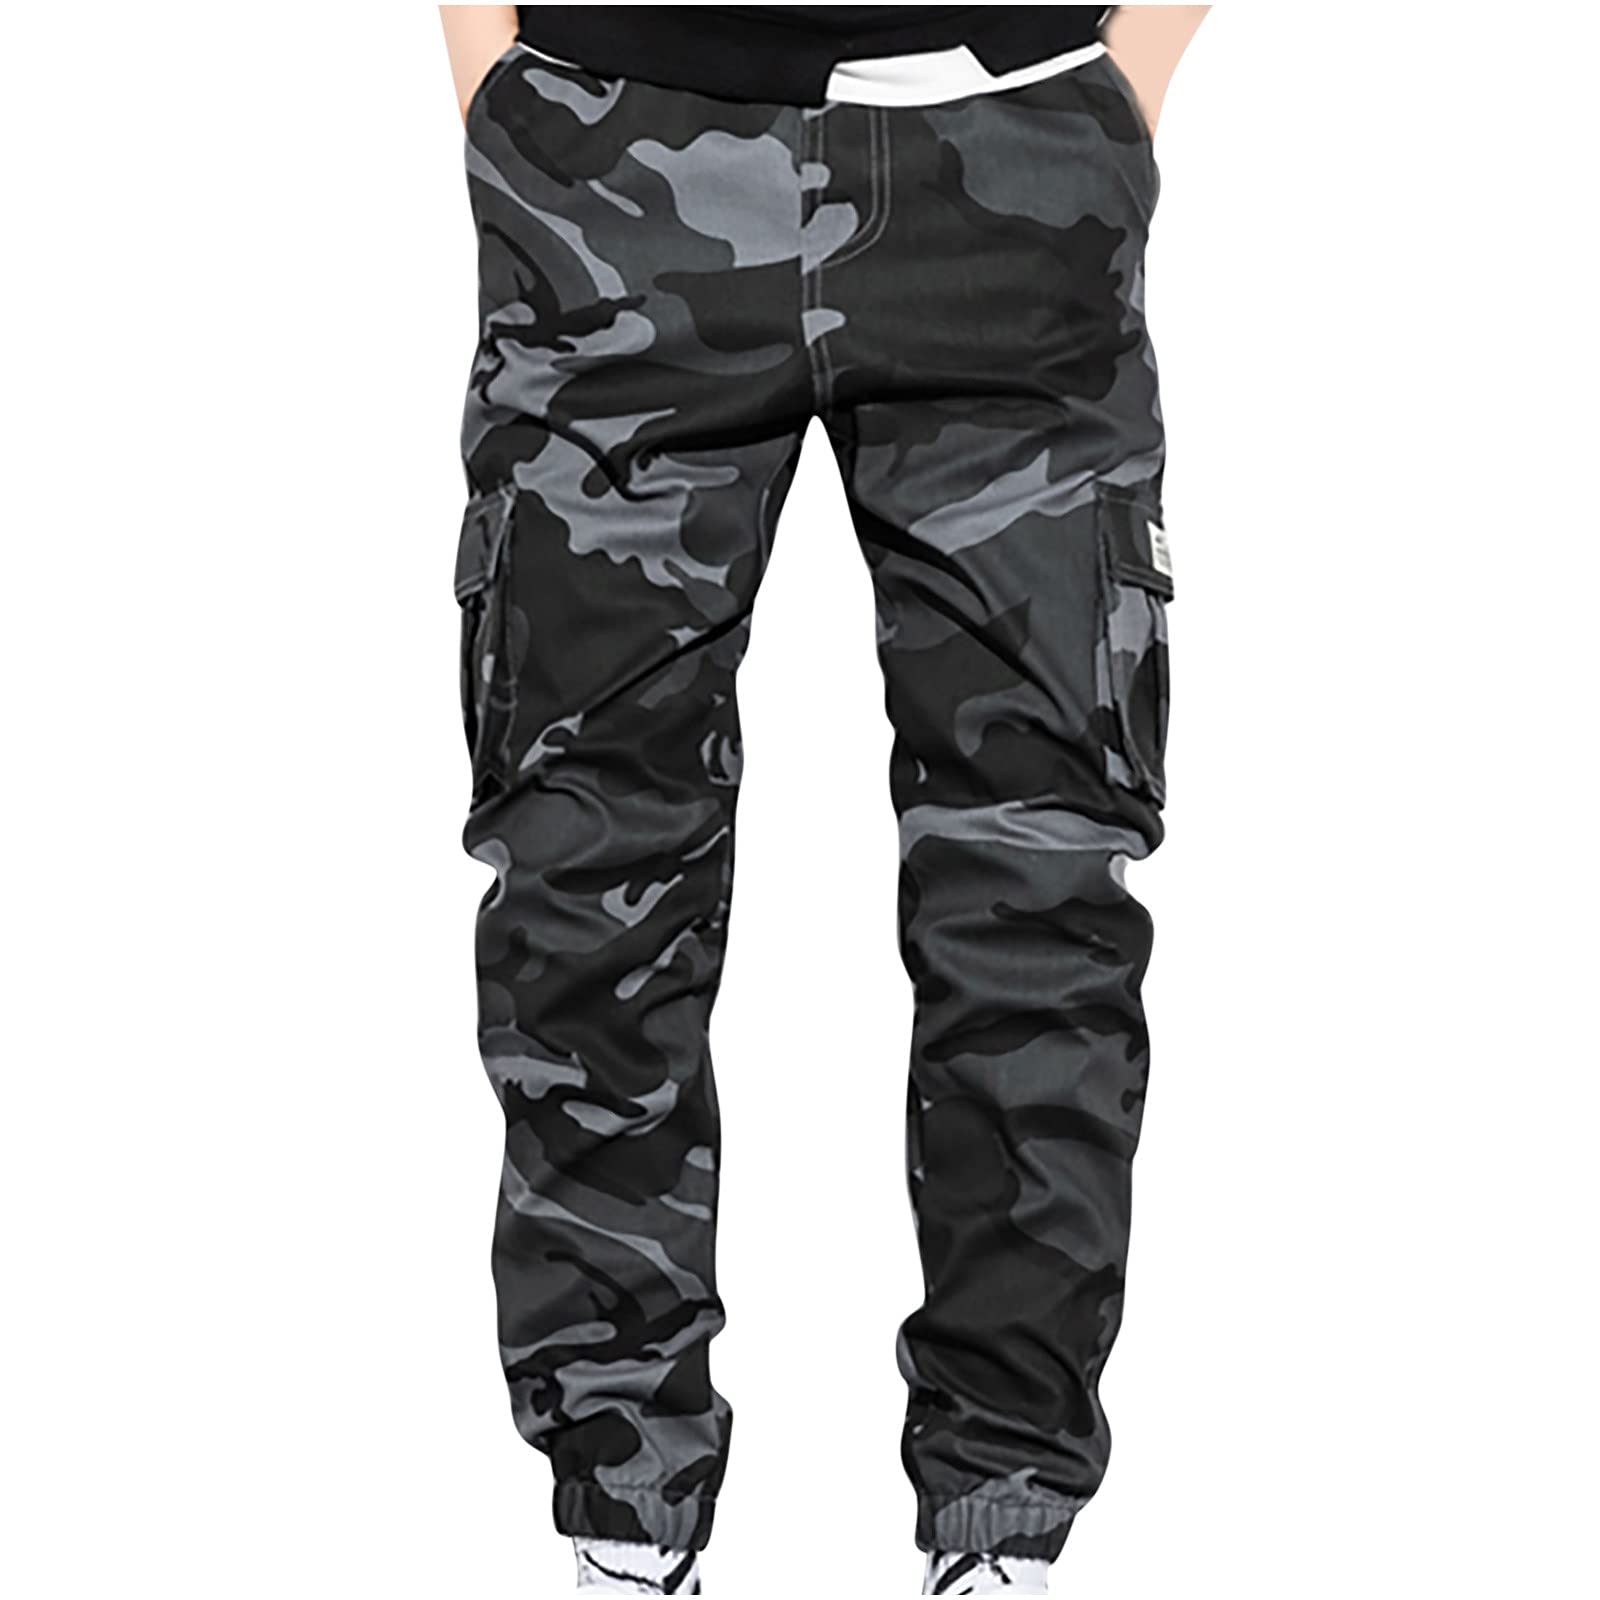 Sweatpants for Men,Men's Casual Cargo Pants Military Army Camo Pants Combat  Work Pants Gym Running Sweatspants Black Large